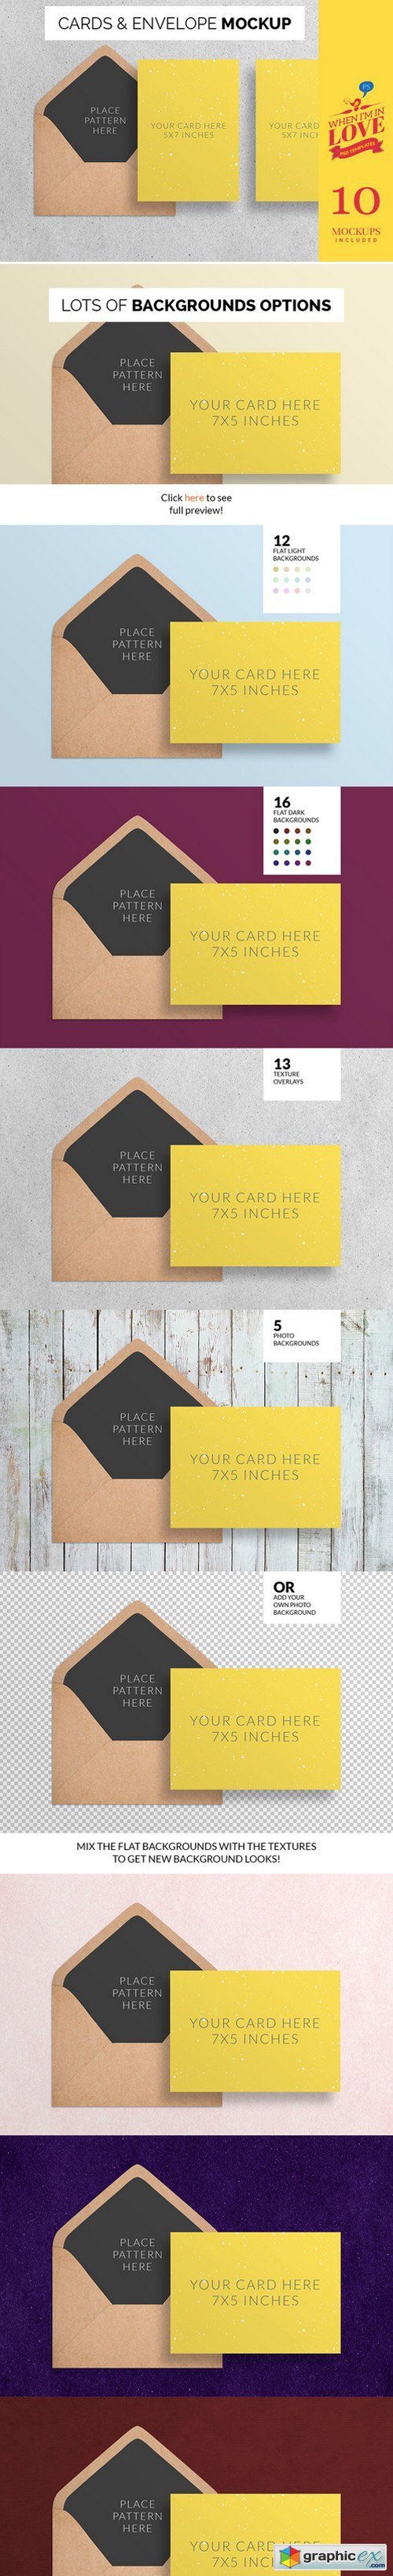 OhMyCard Mockup - Cards & Envelope